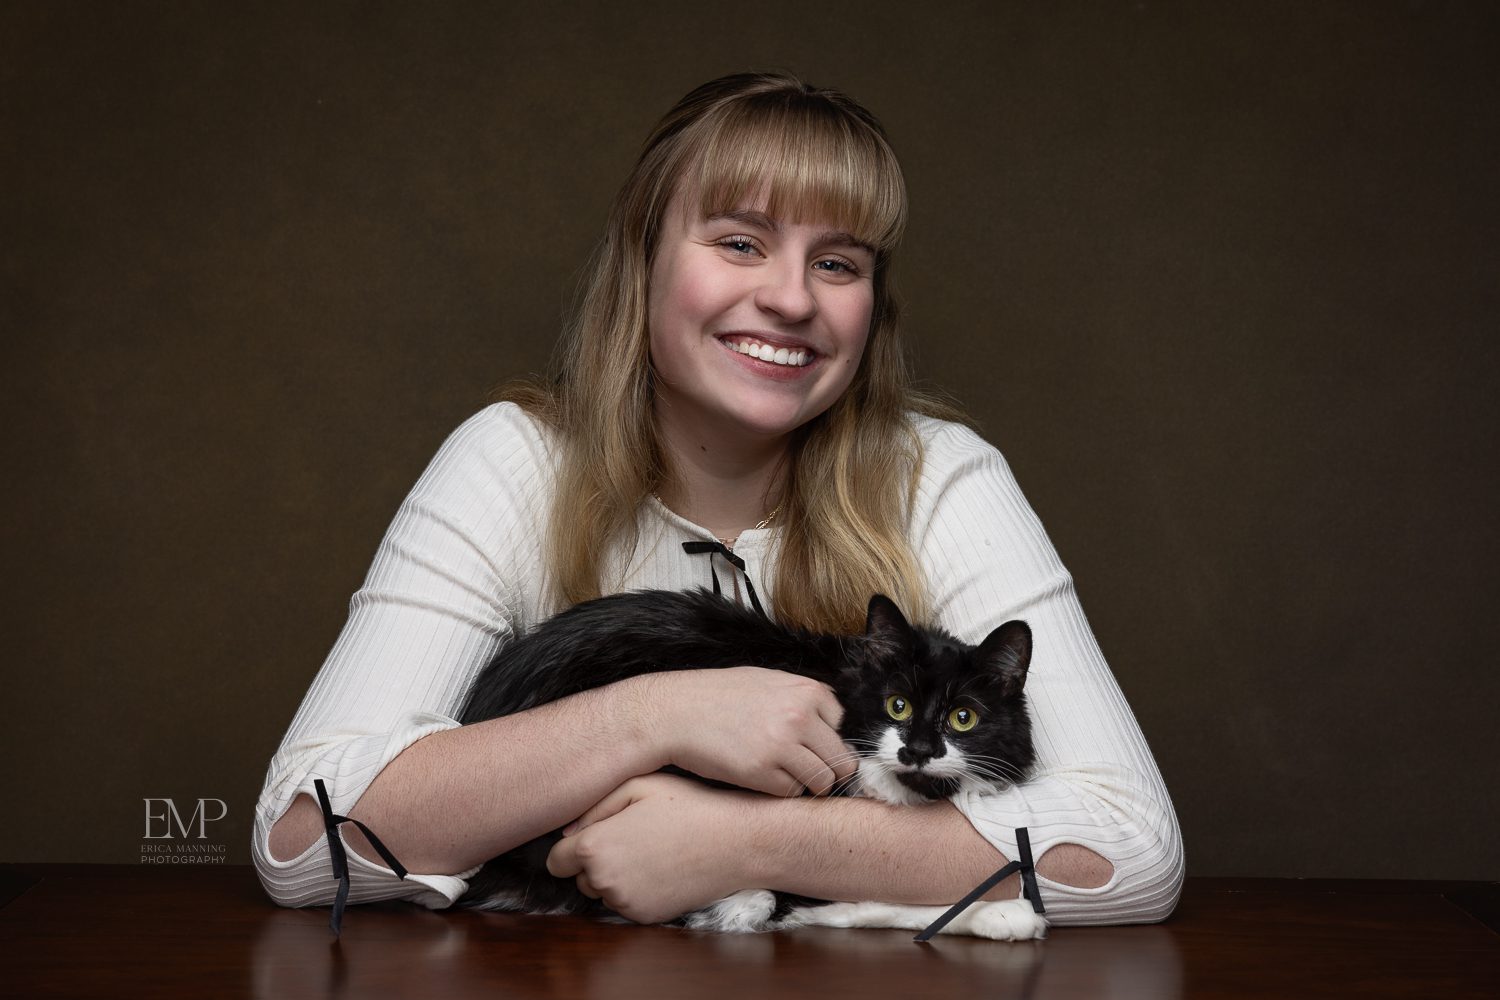 High school senior girl with cat